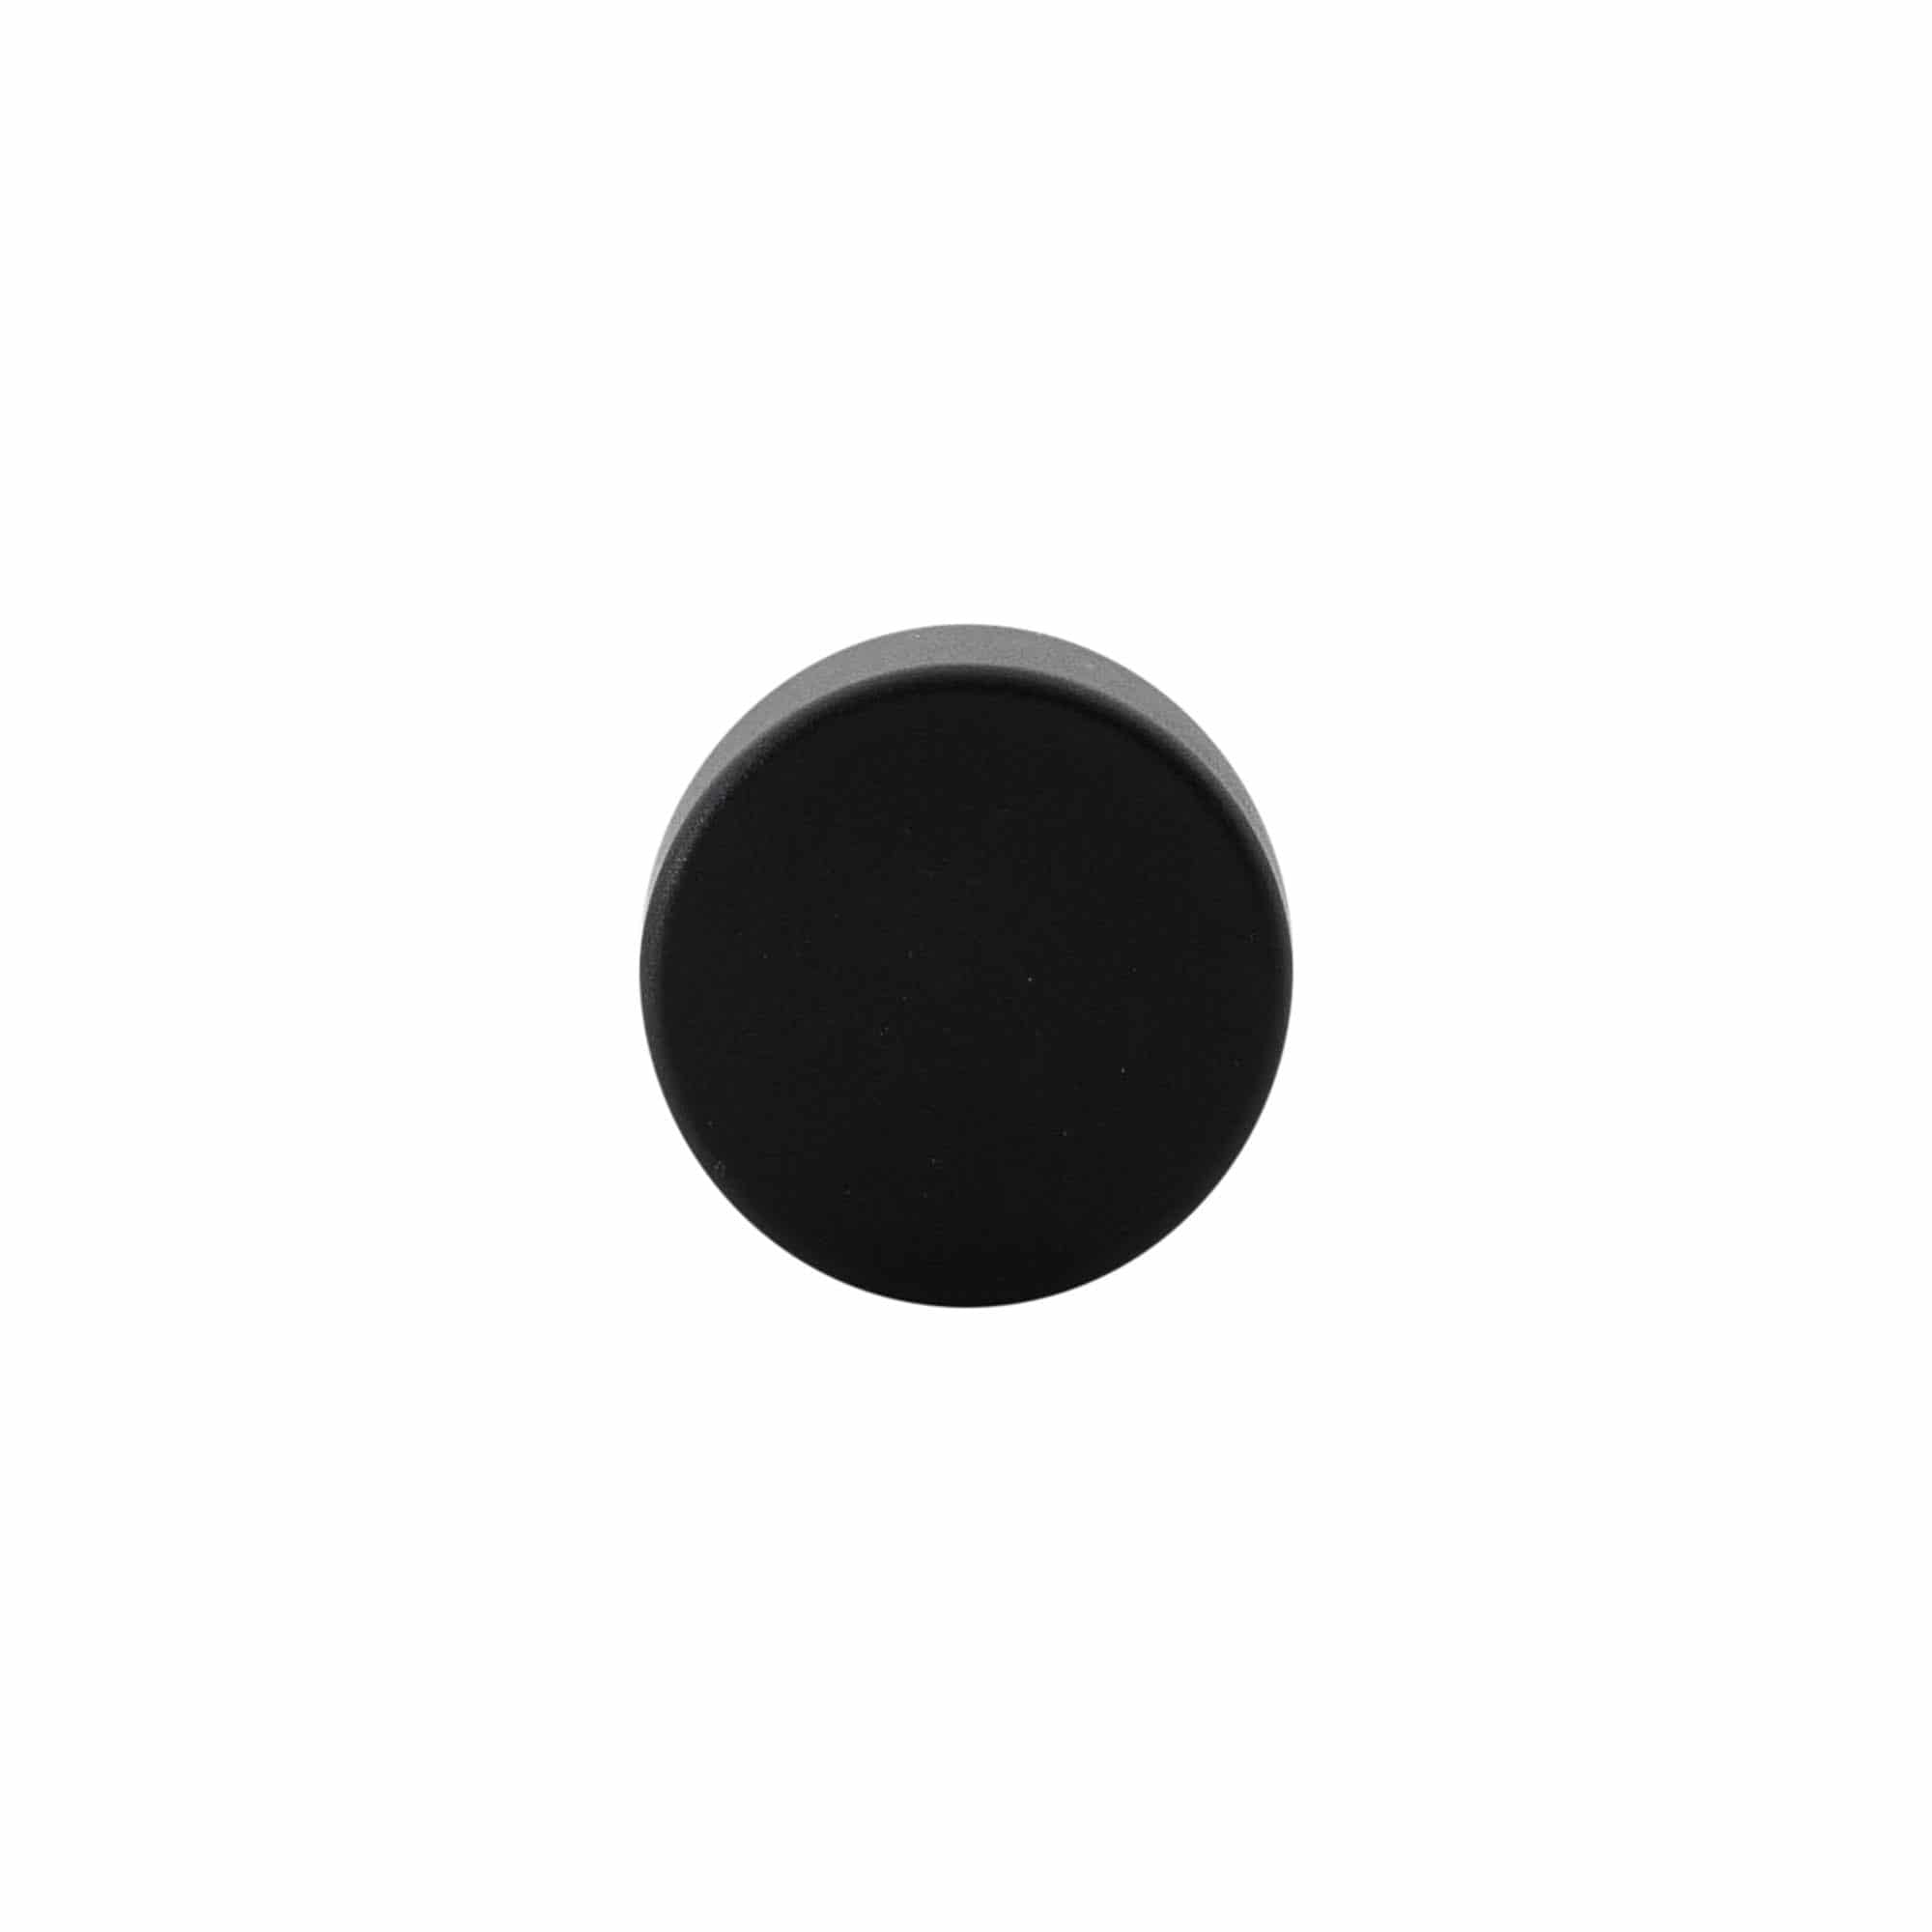 Korek s úchytem 19 mm, plast, černý, pro uzávěr: korek